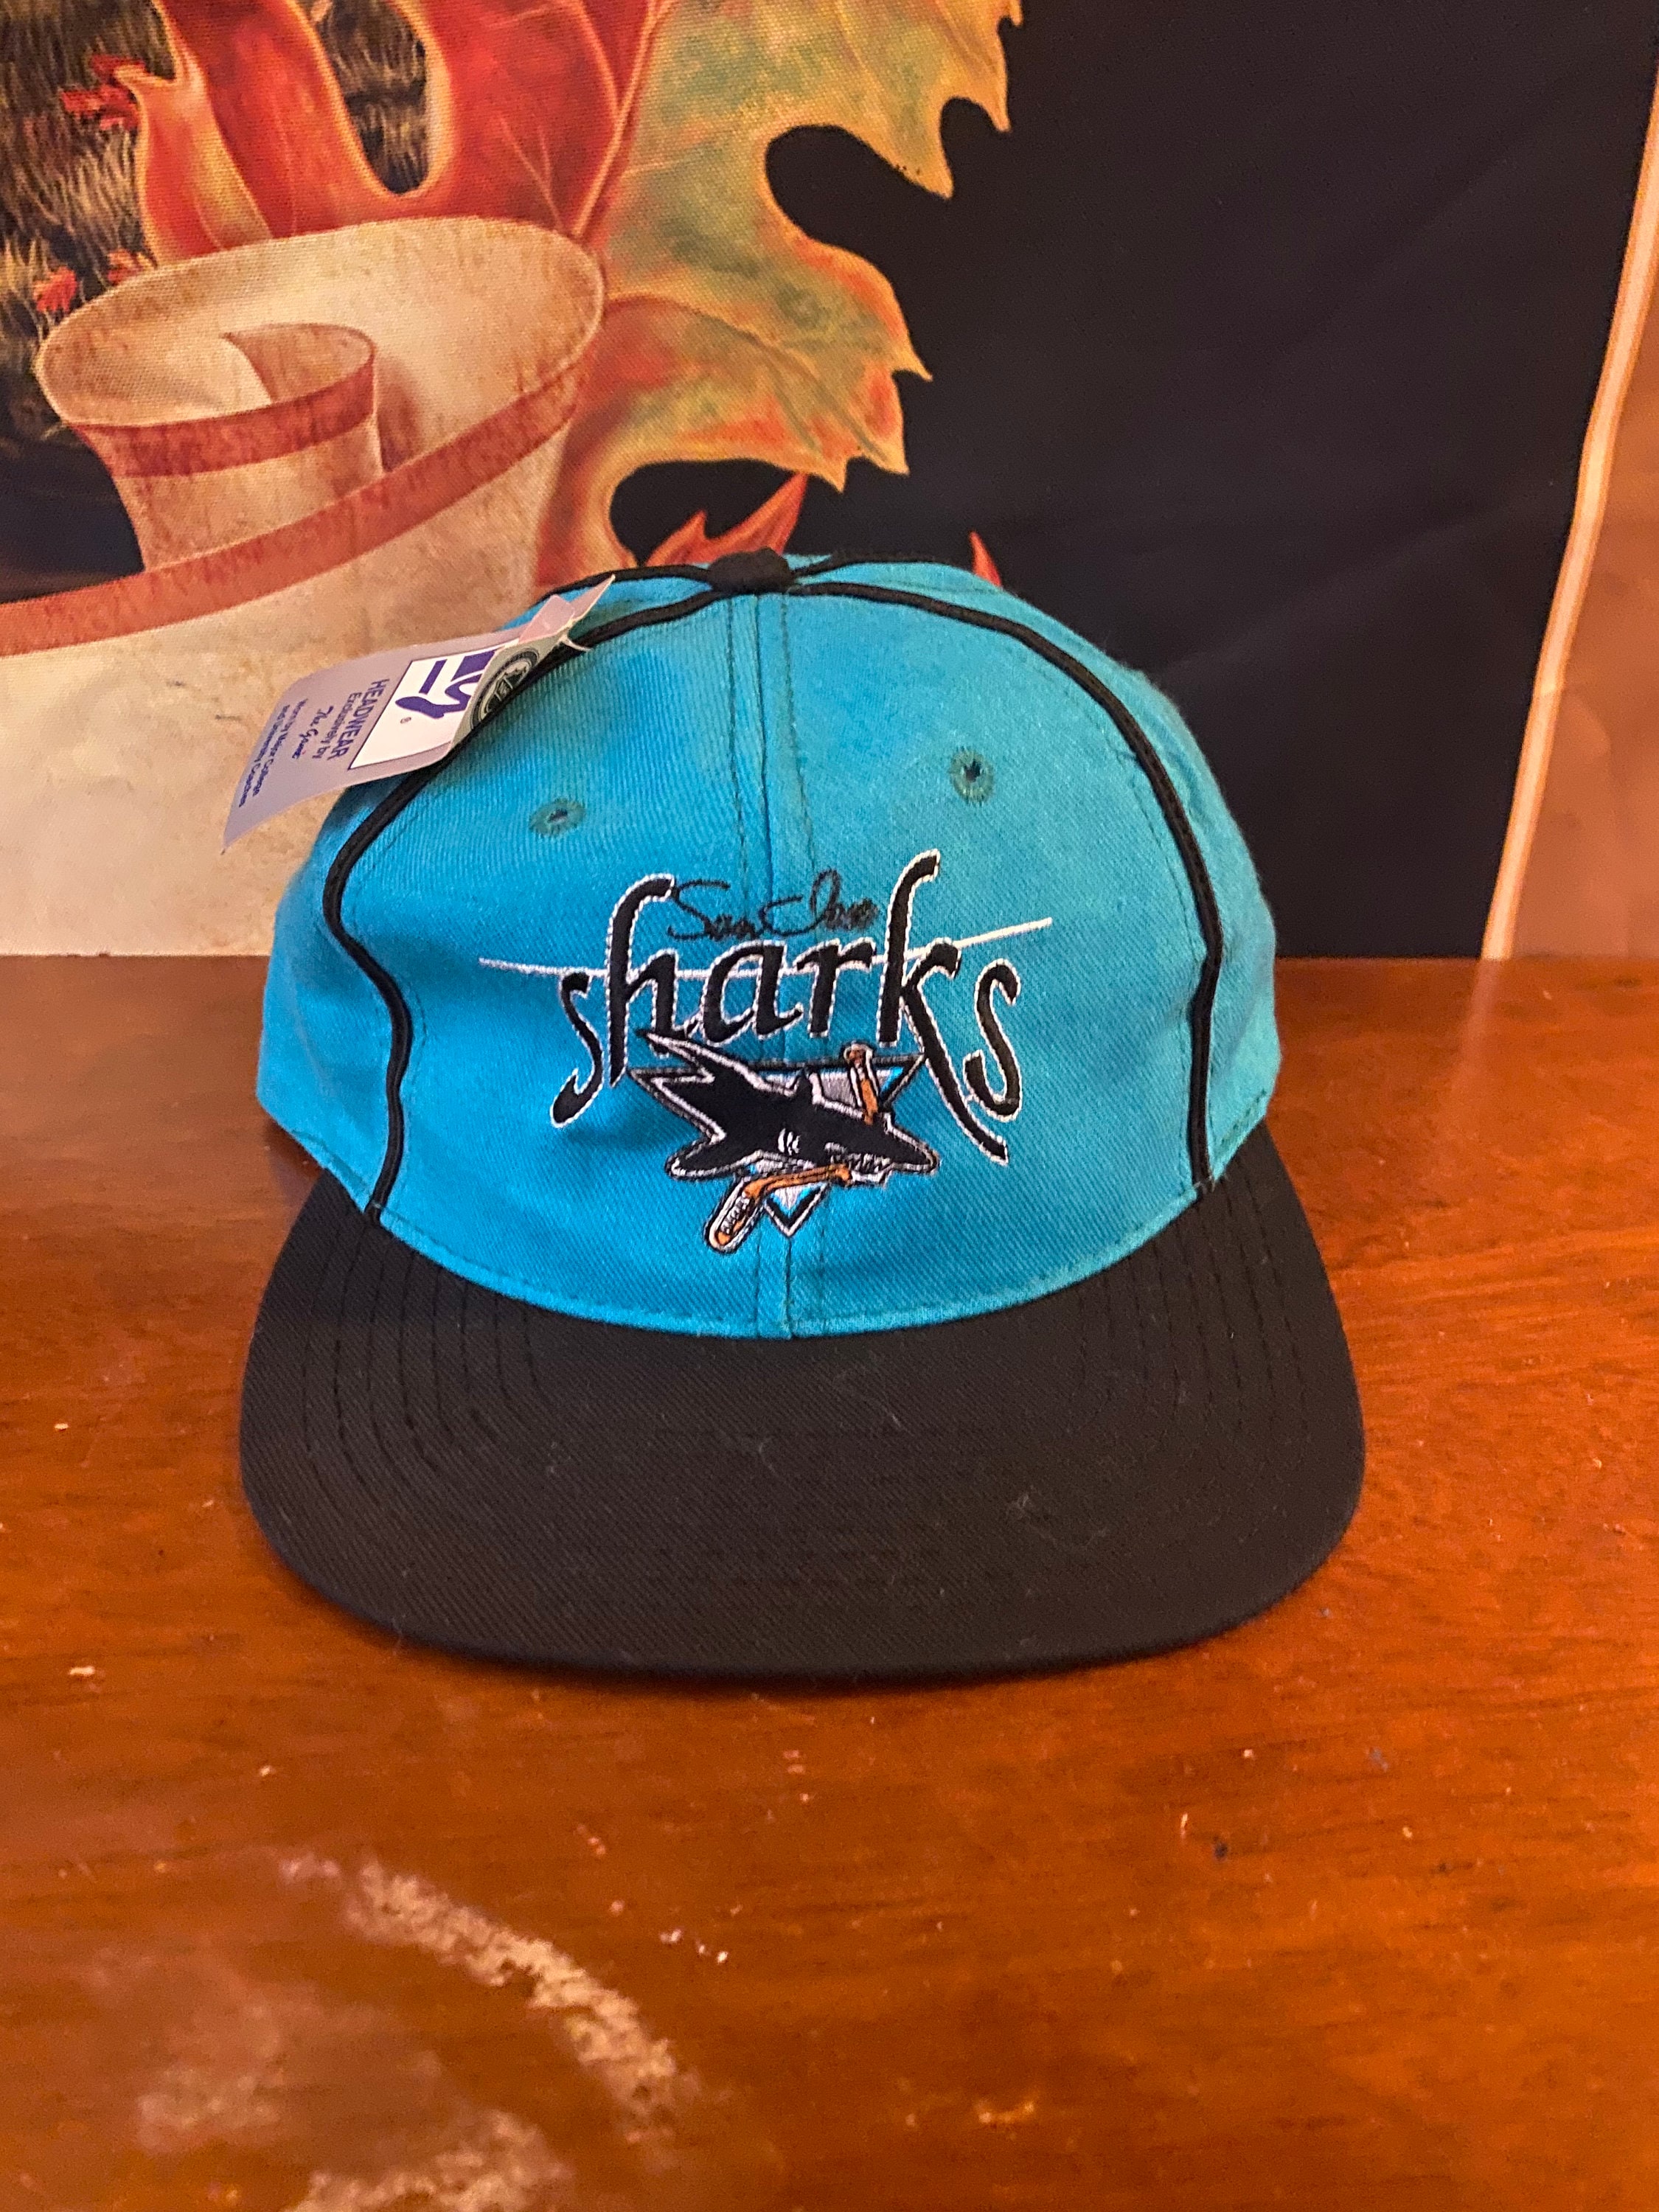 Vintage 90s San Jose Sharks Starter Snapback Hat Cap NHL Hockey Black Blue